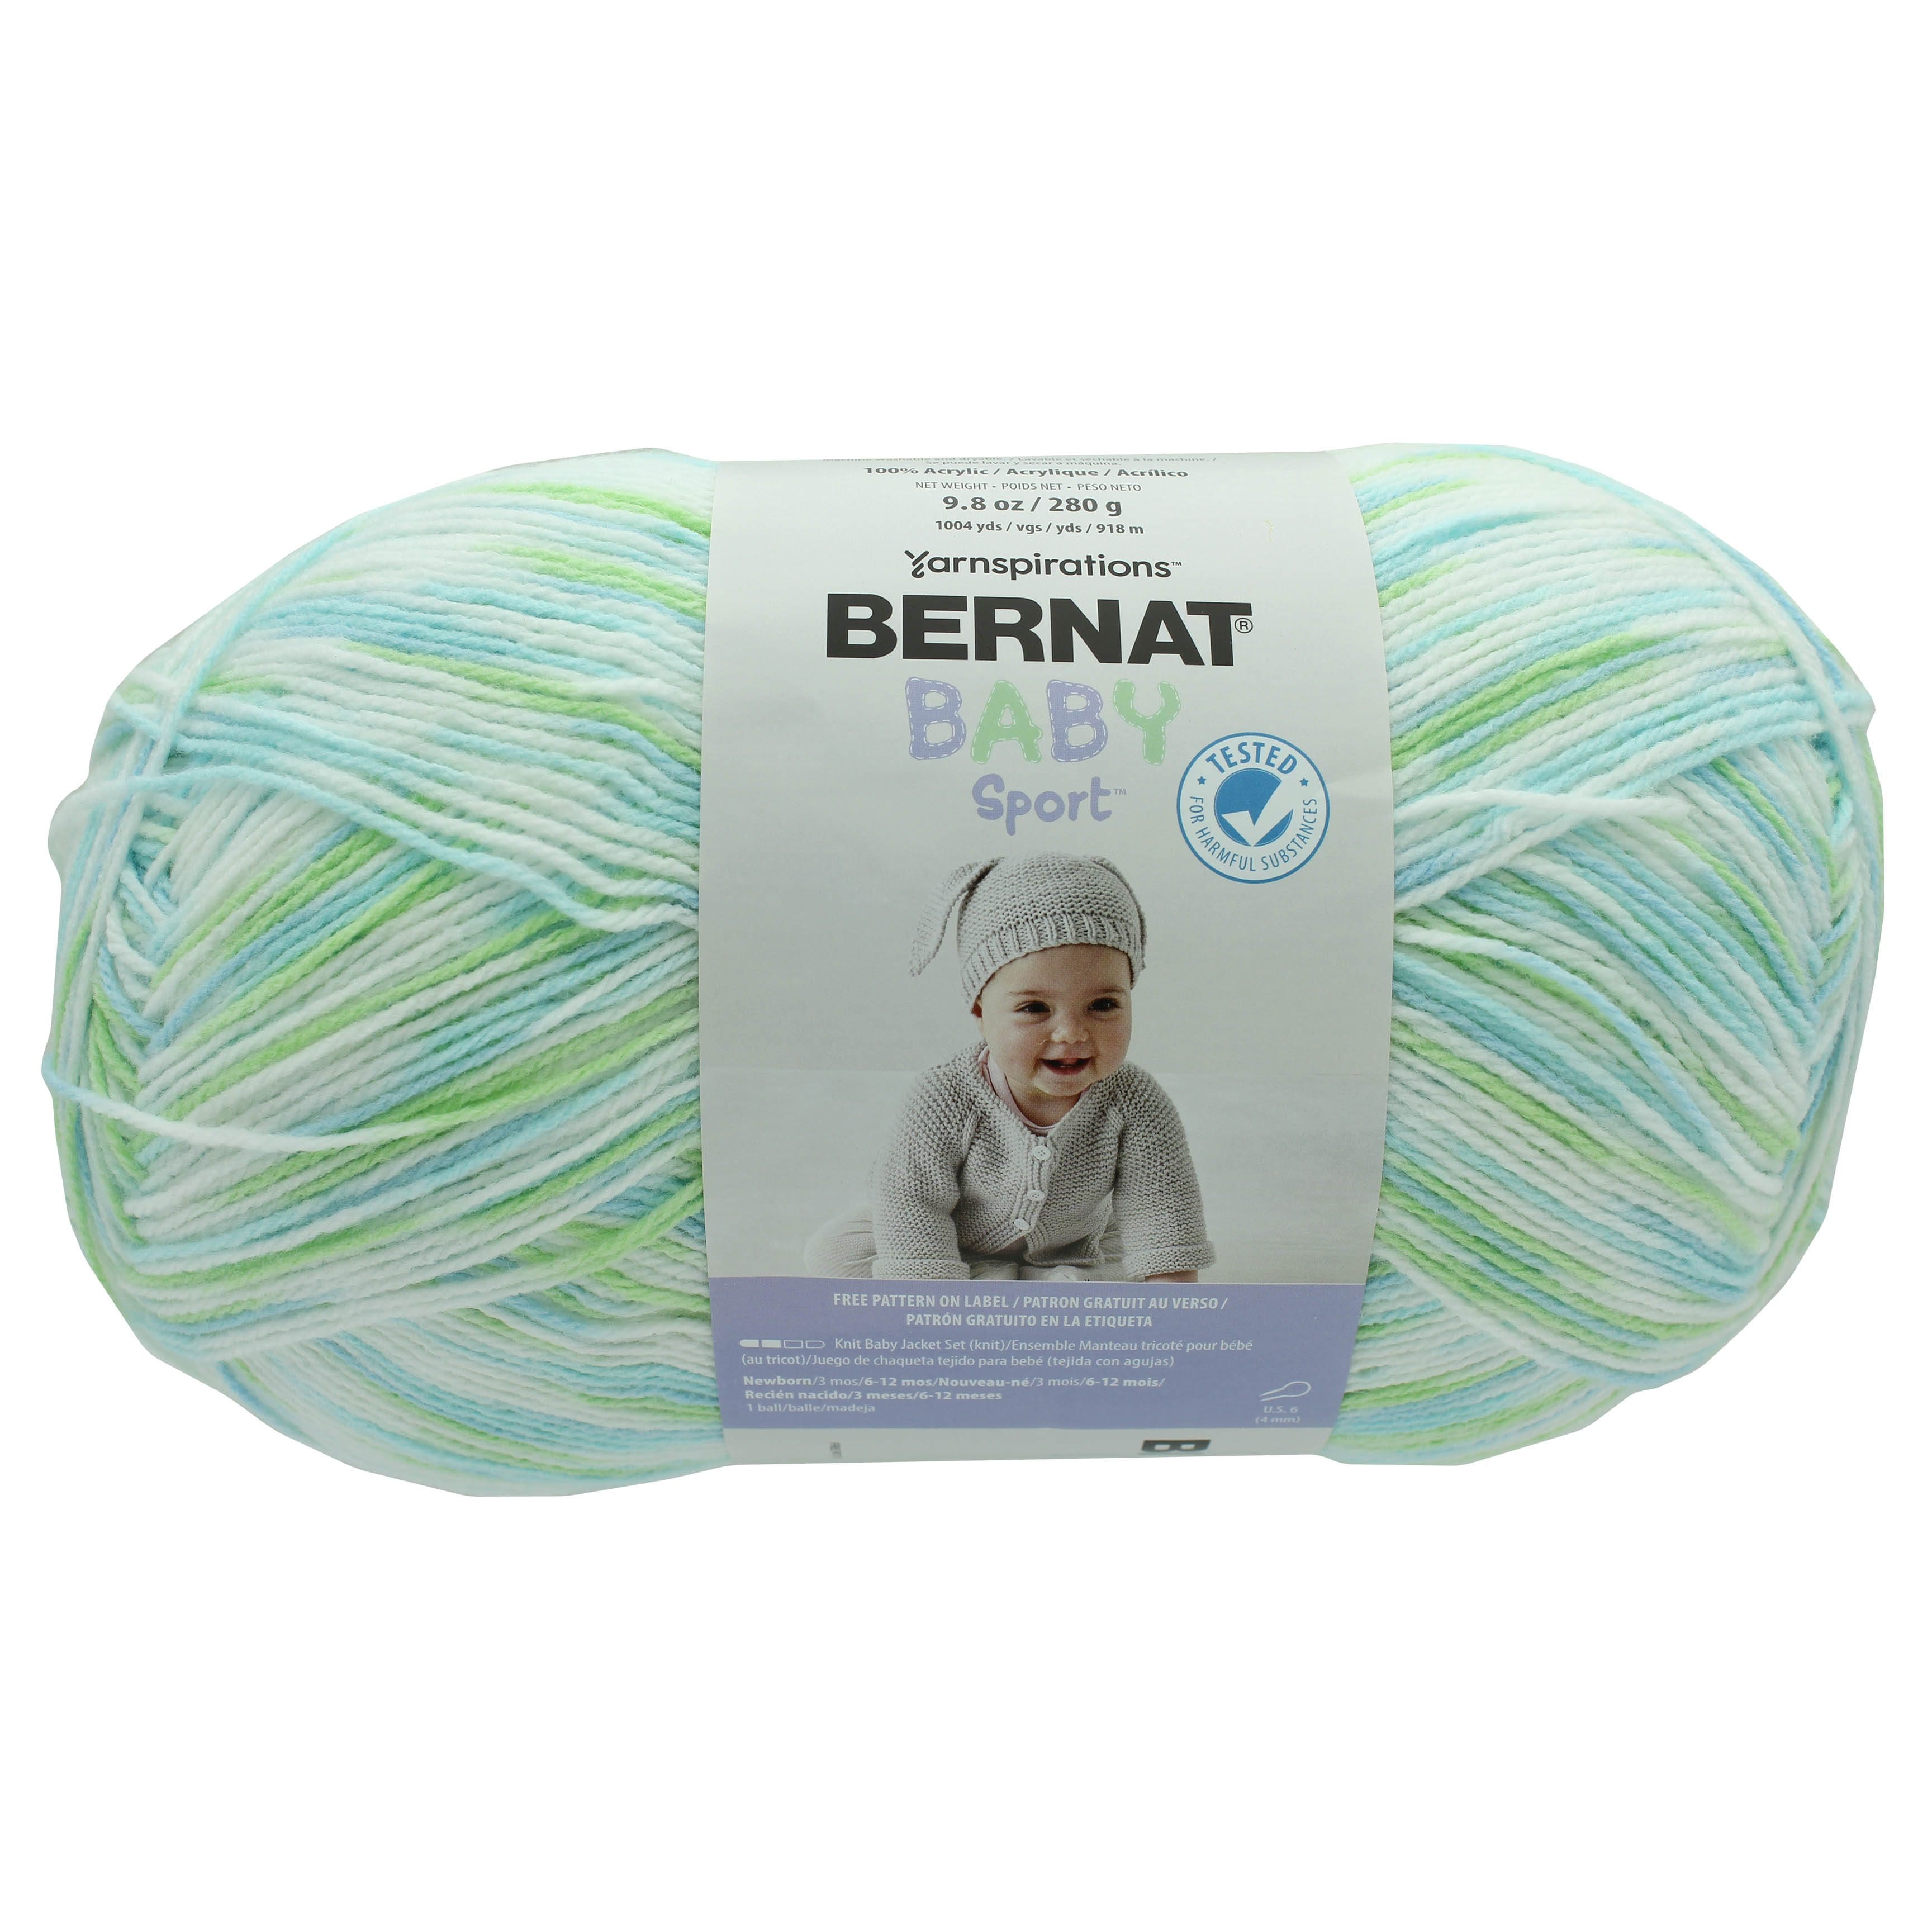 Bernat Baby Big Ball Sport Yarn by Bernat